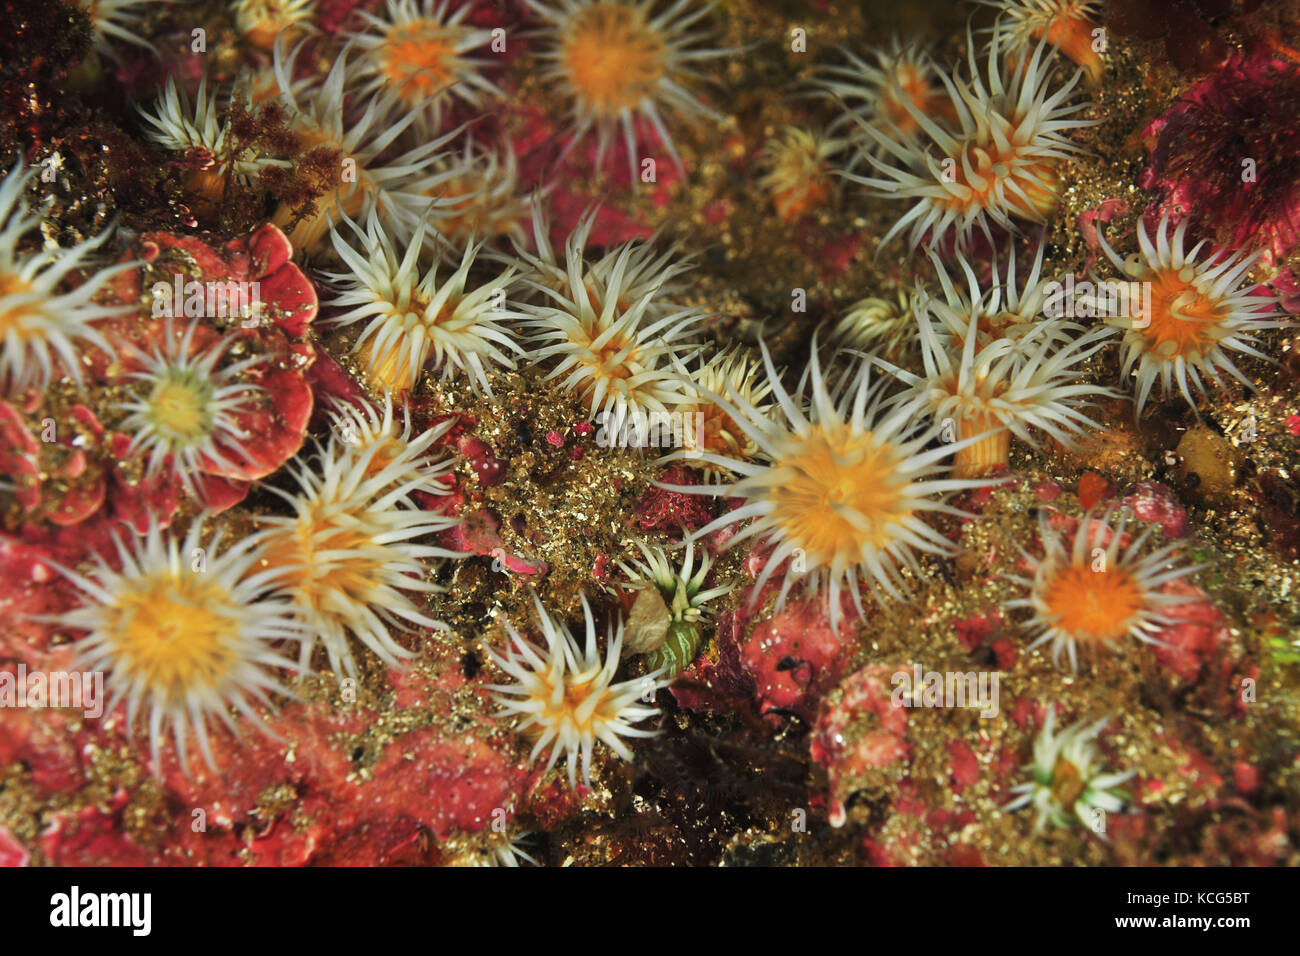 Garden of white striped anemones Anthothoe albocincta on rocks covered with pink coralline algae. Stock Photo